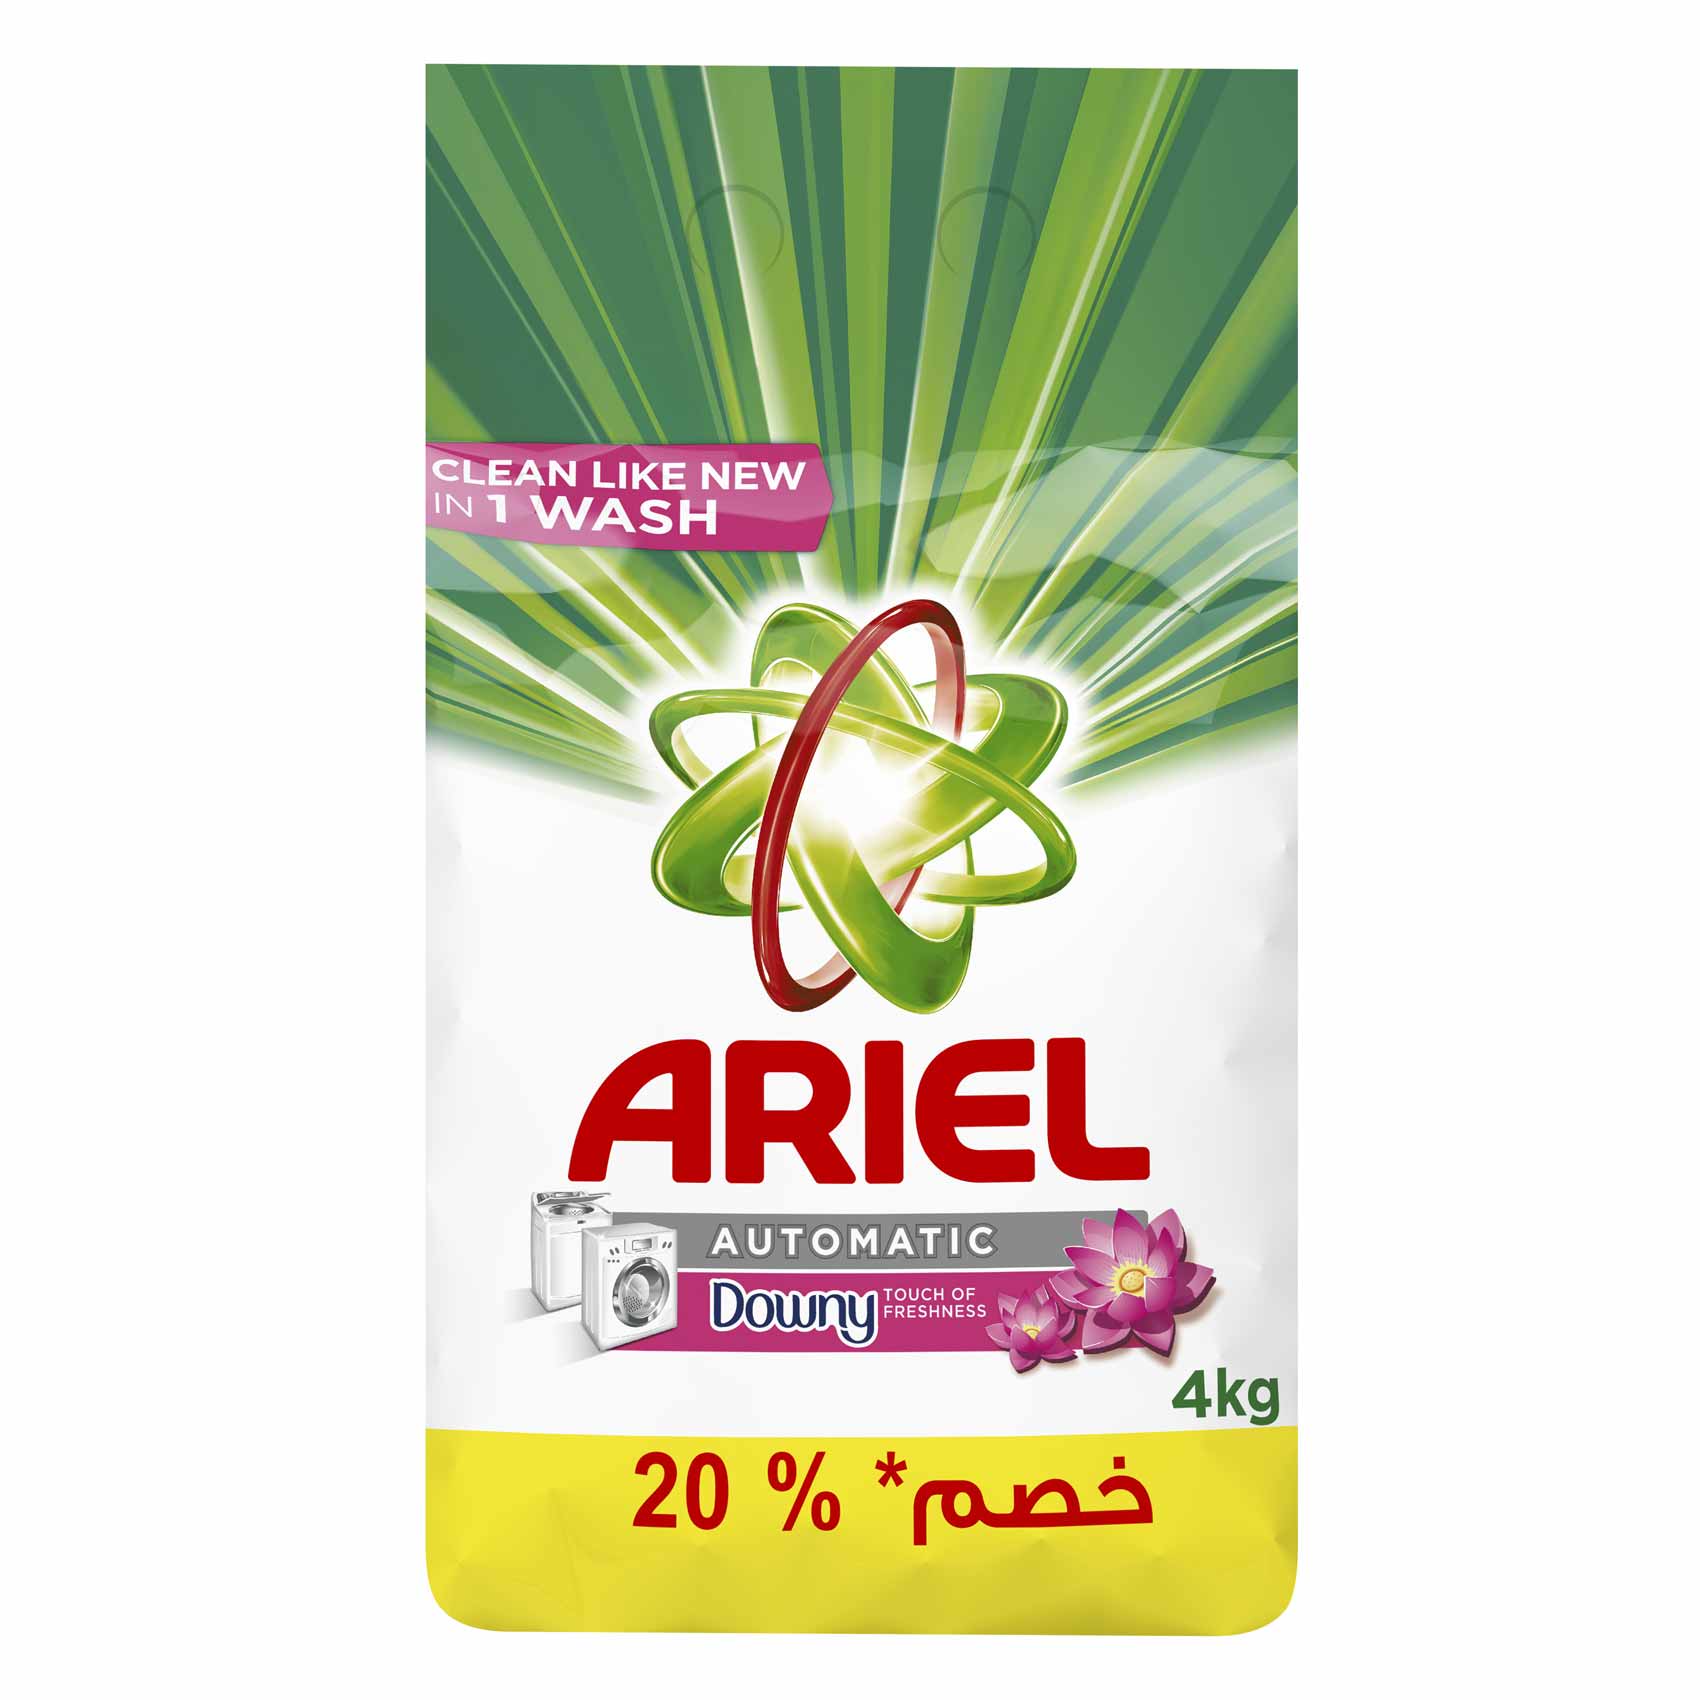 Ariel Powder Detergent Original 4KG  20Percent  Off